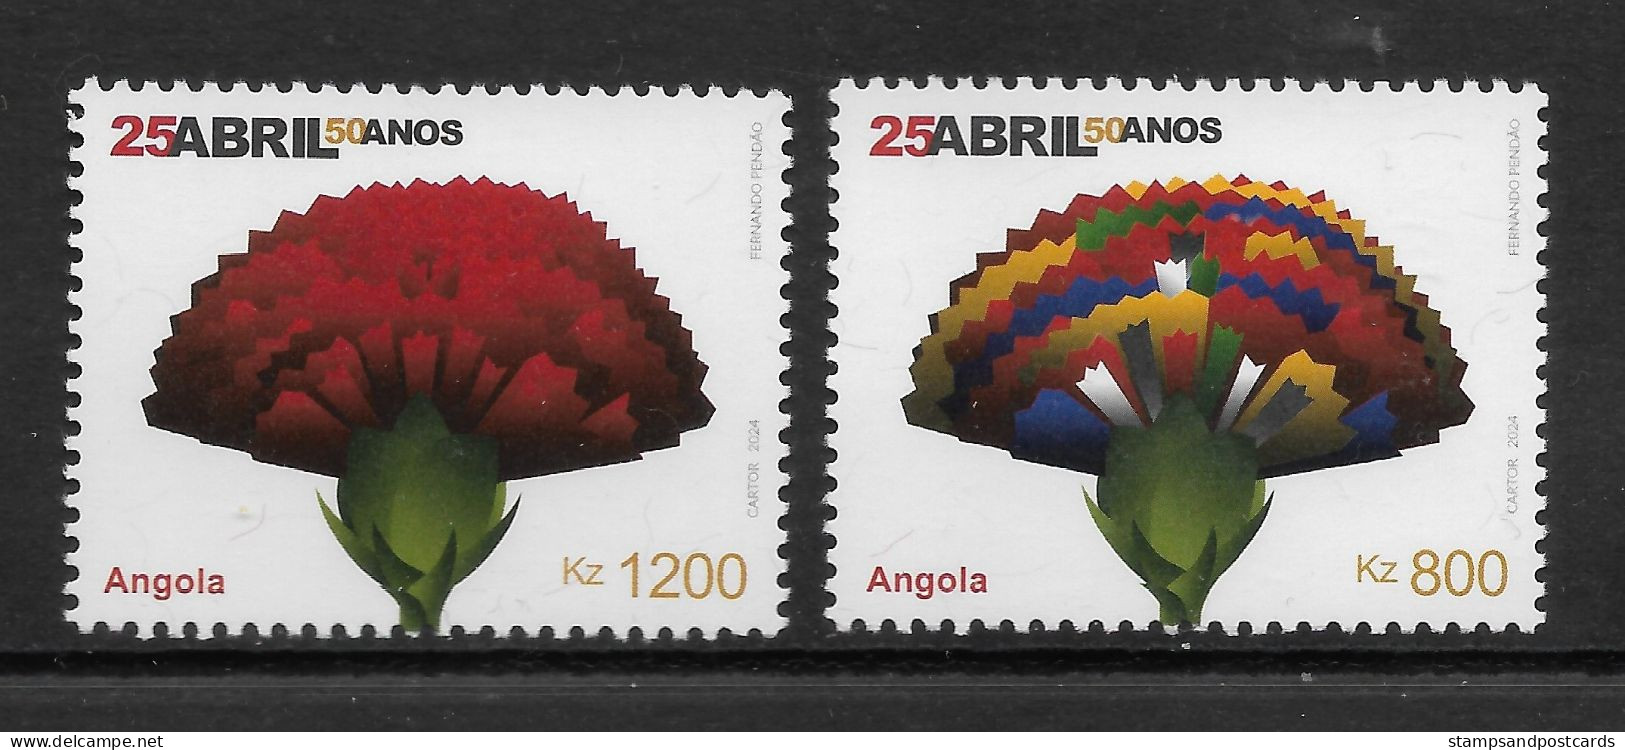 Angola 2024 Emission Commune Joint Issue Portugal 25 Avril Revolution Des Oeillets Carnation Revolution - Emissions Communes